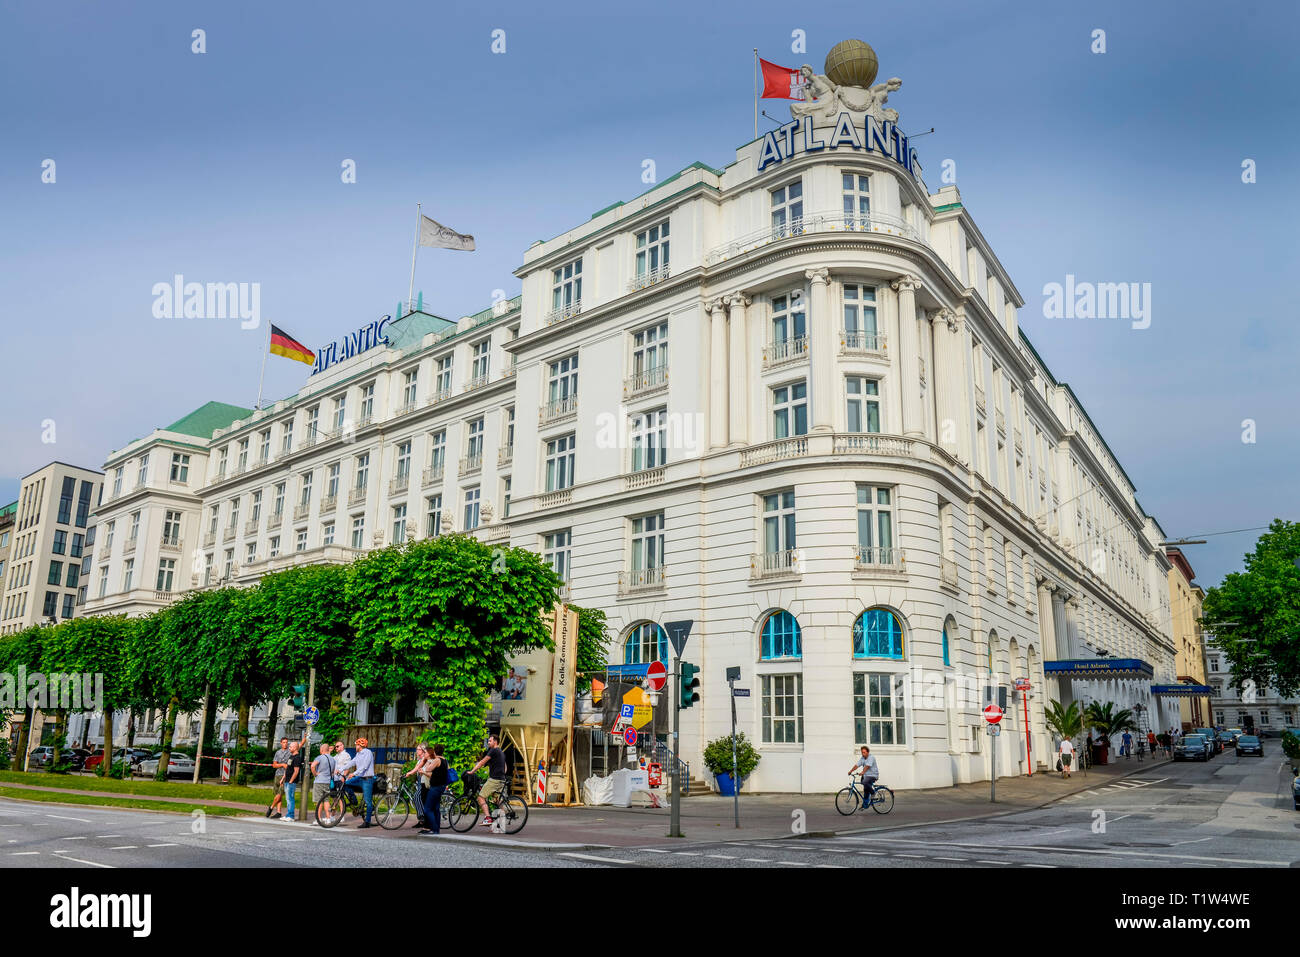 Hotel Atlantic Kempinski, An der Alster, Hamburg, Deutschland Stock Photo